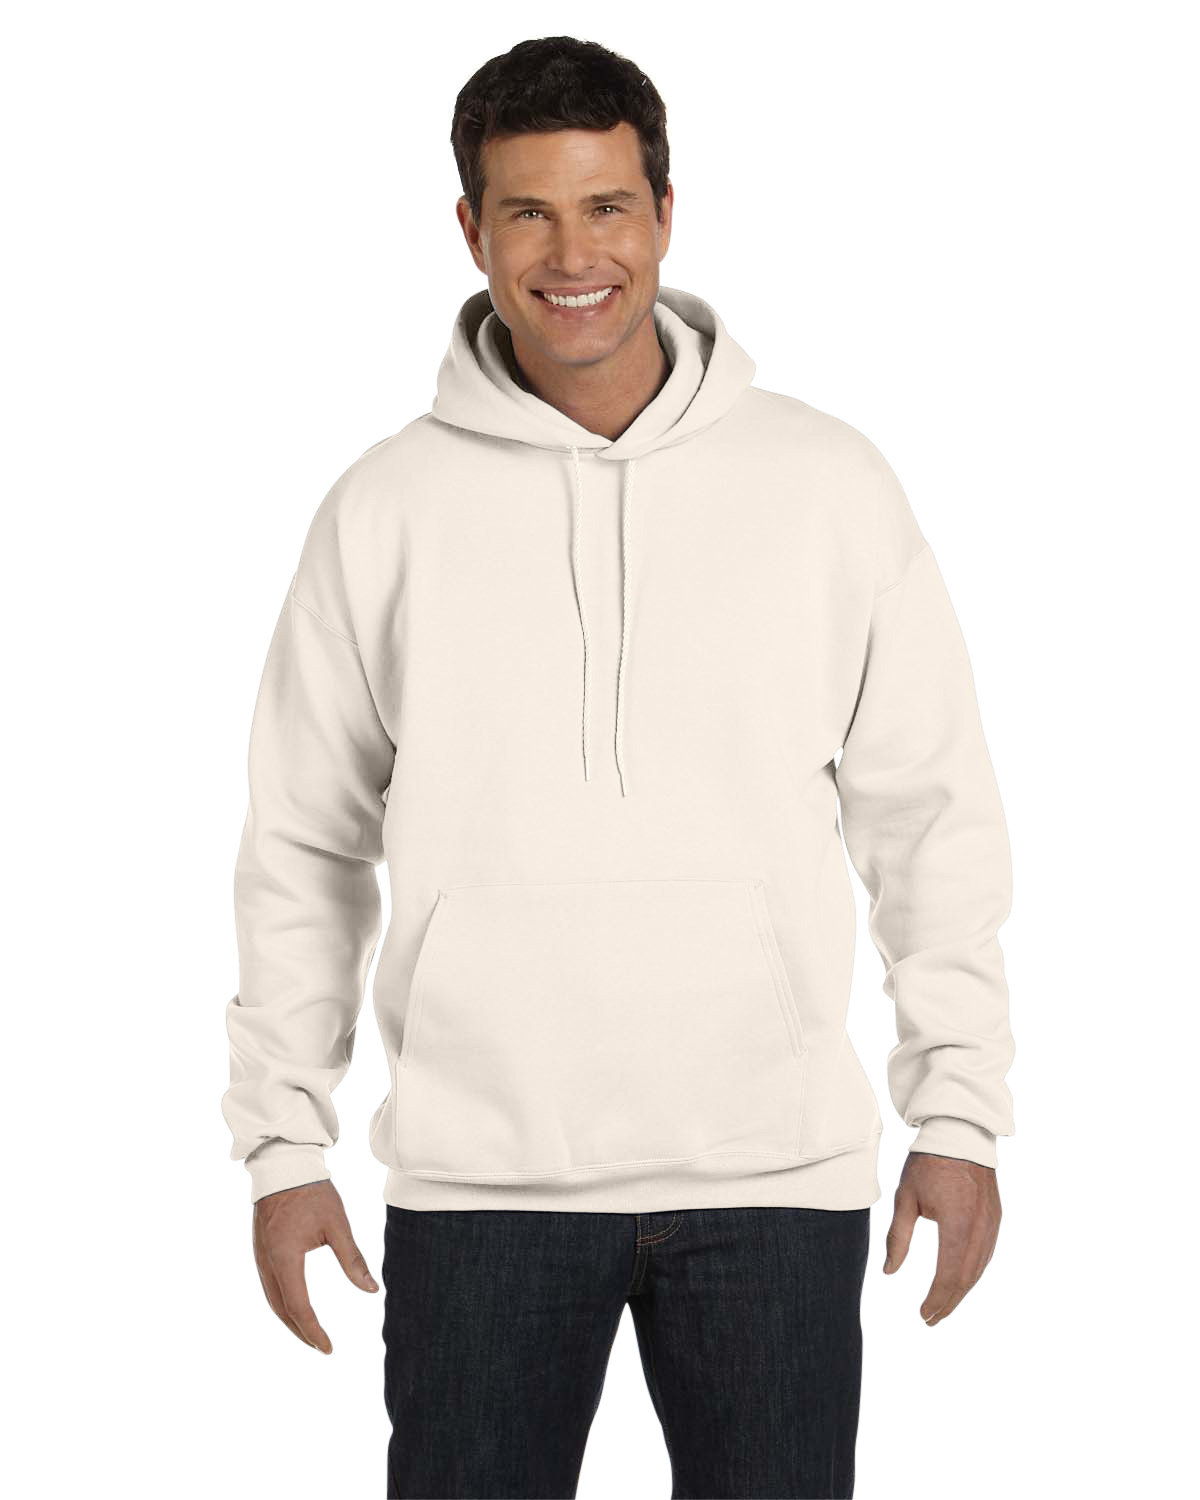 Hanes F170, Ultimate Cotton ® - Pullover Hooded Sweatshirt